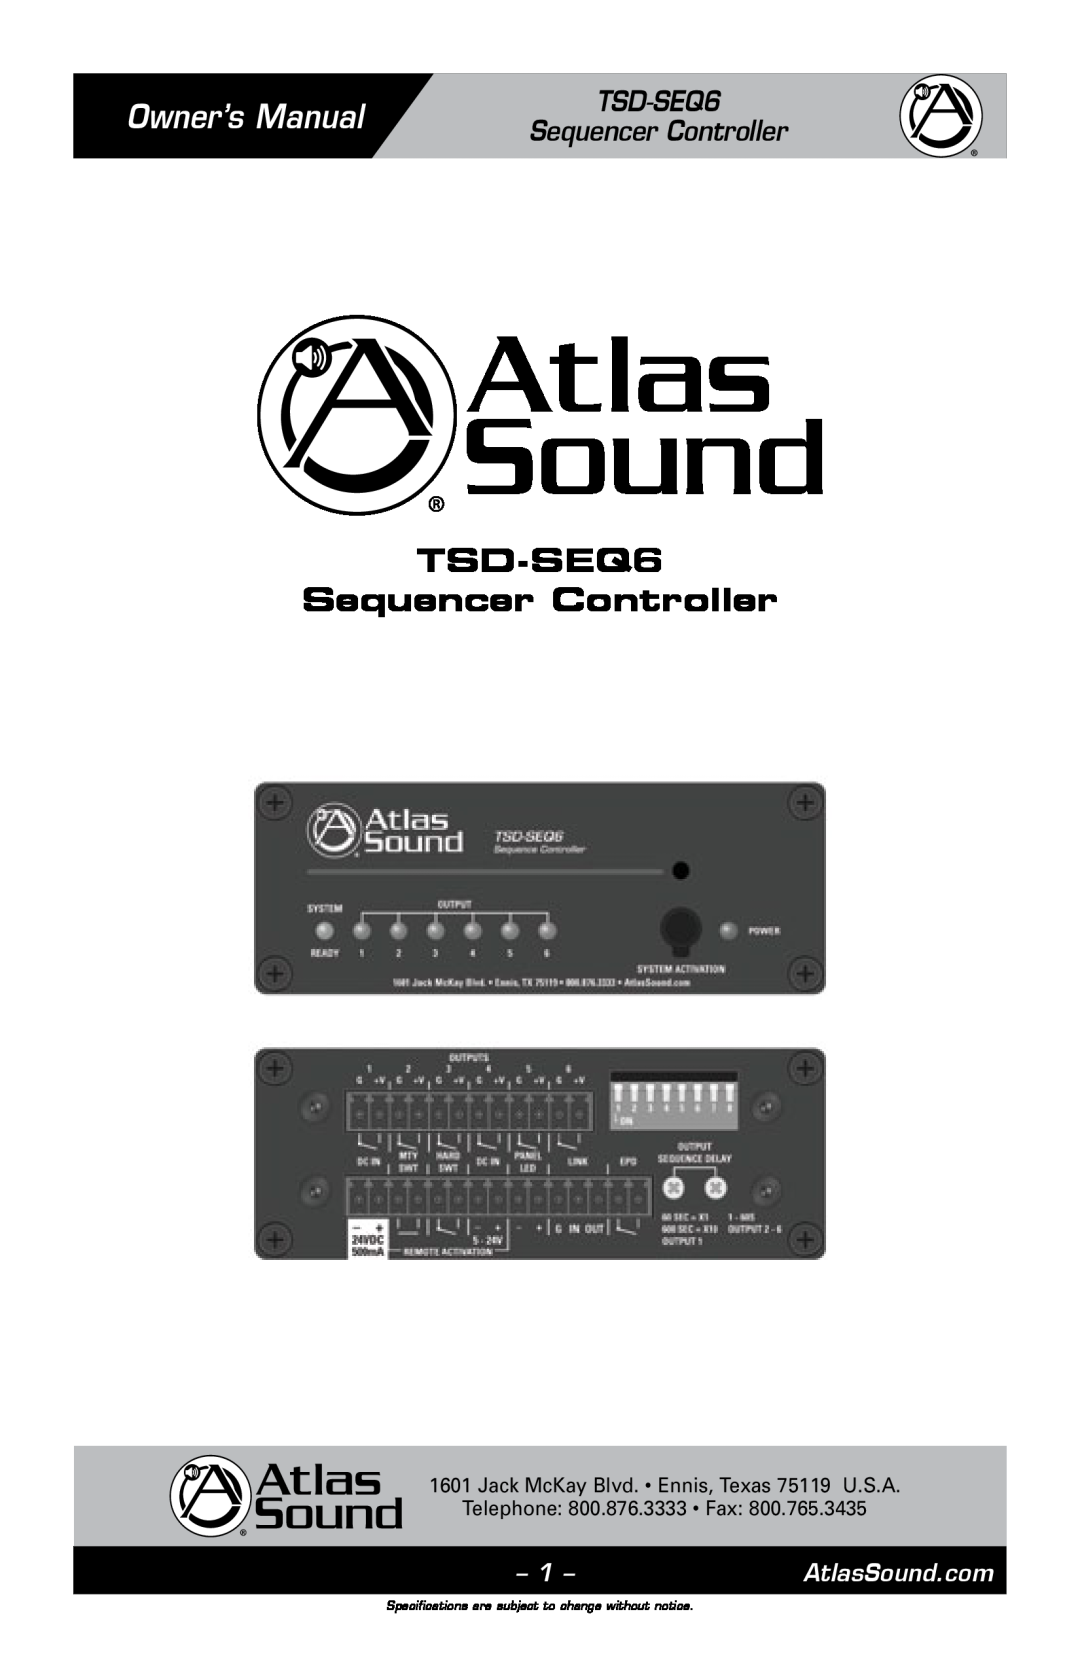 Atlas Sound owner manual Owner’s Manual, TSD-SEQ6 Sequencer Controller, AtlasSound.com, Telephone 800.876.3333 Fax 